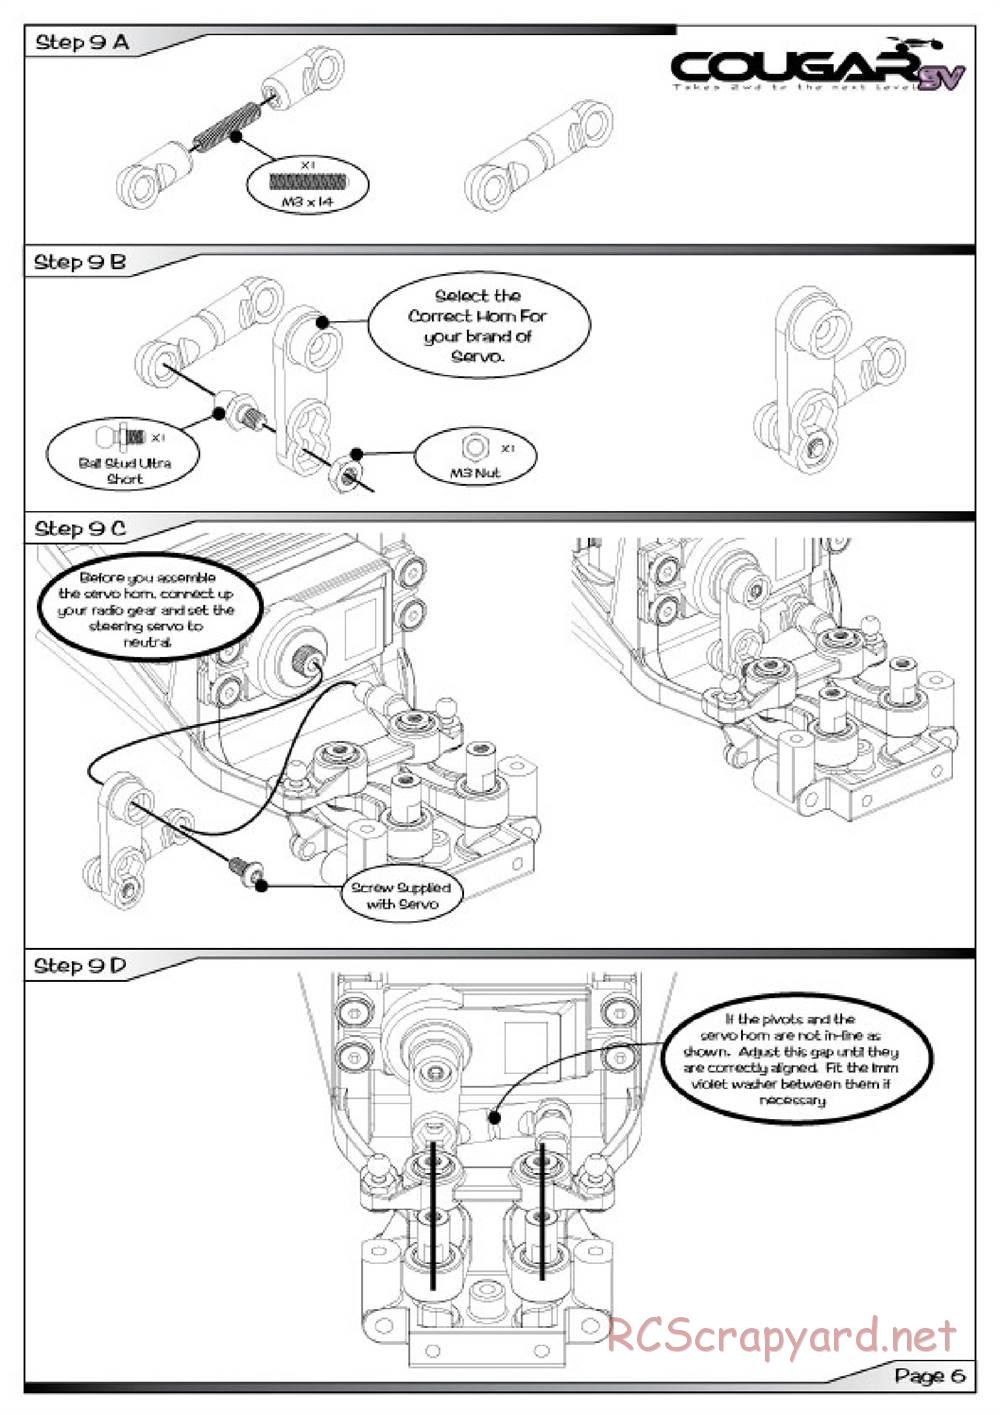 Schumacher - Cougar SV - Manual - Page 7